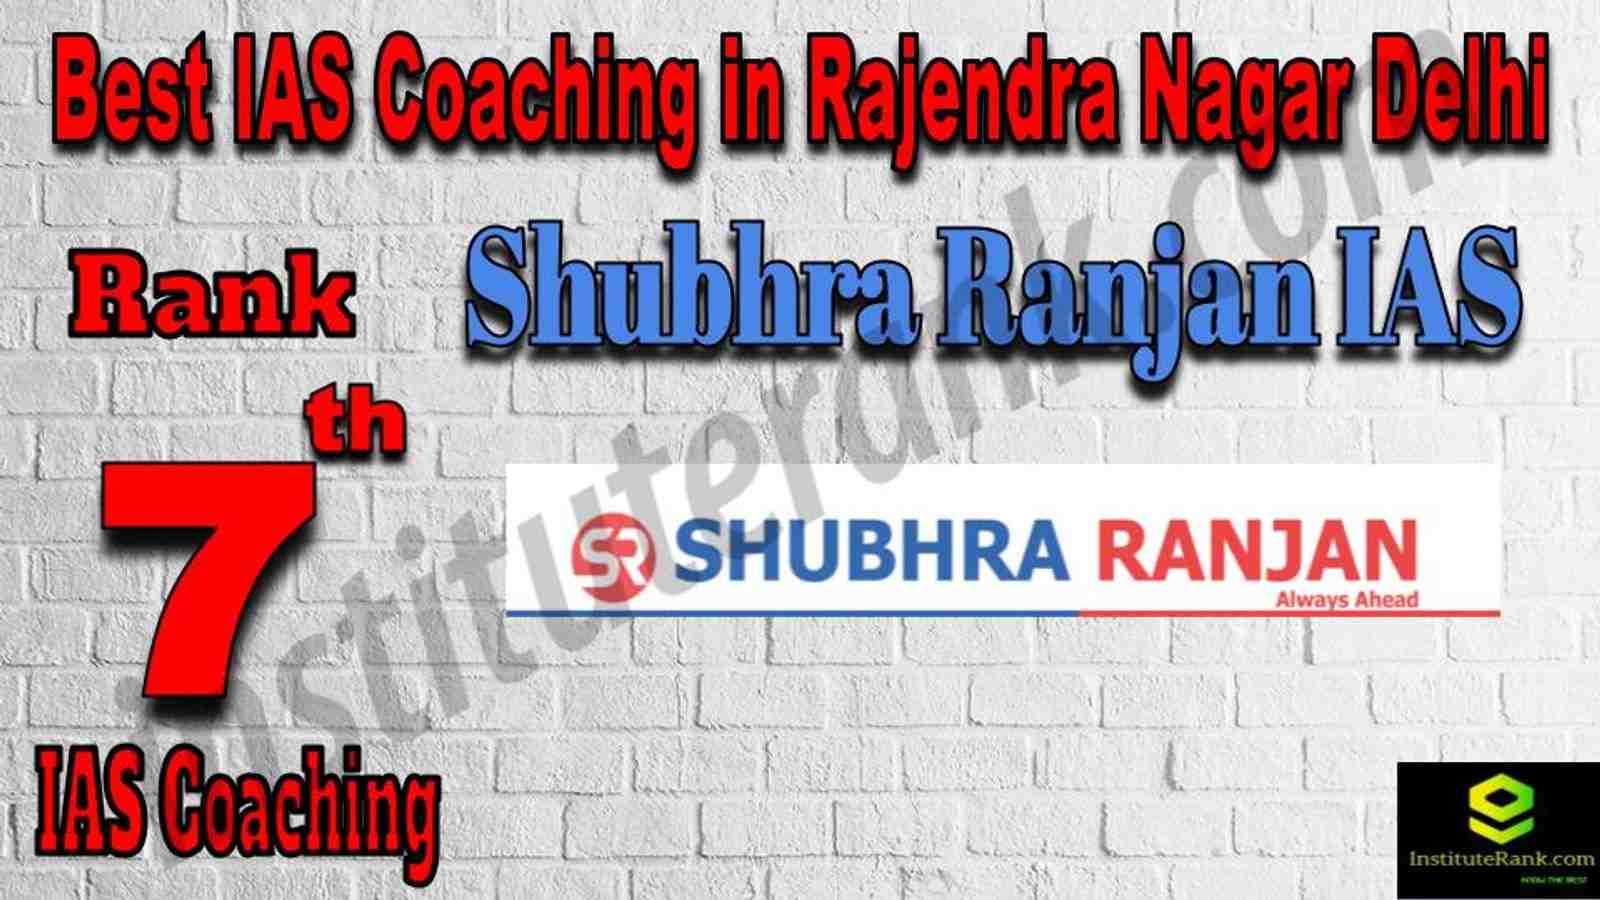 7th Best IAS Coaching in Rajendra Nagar